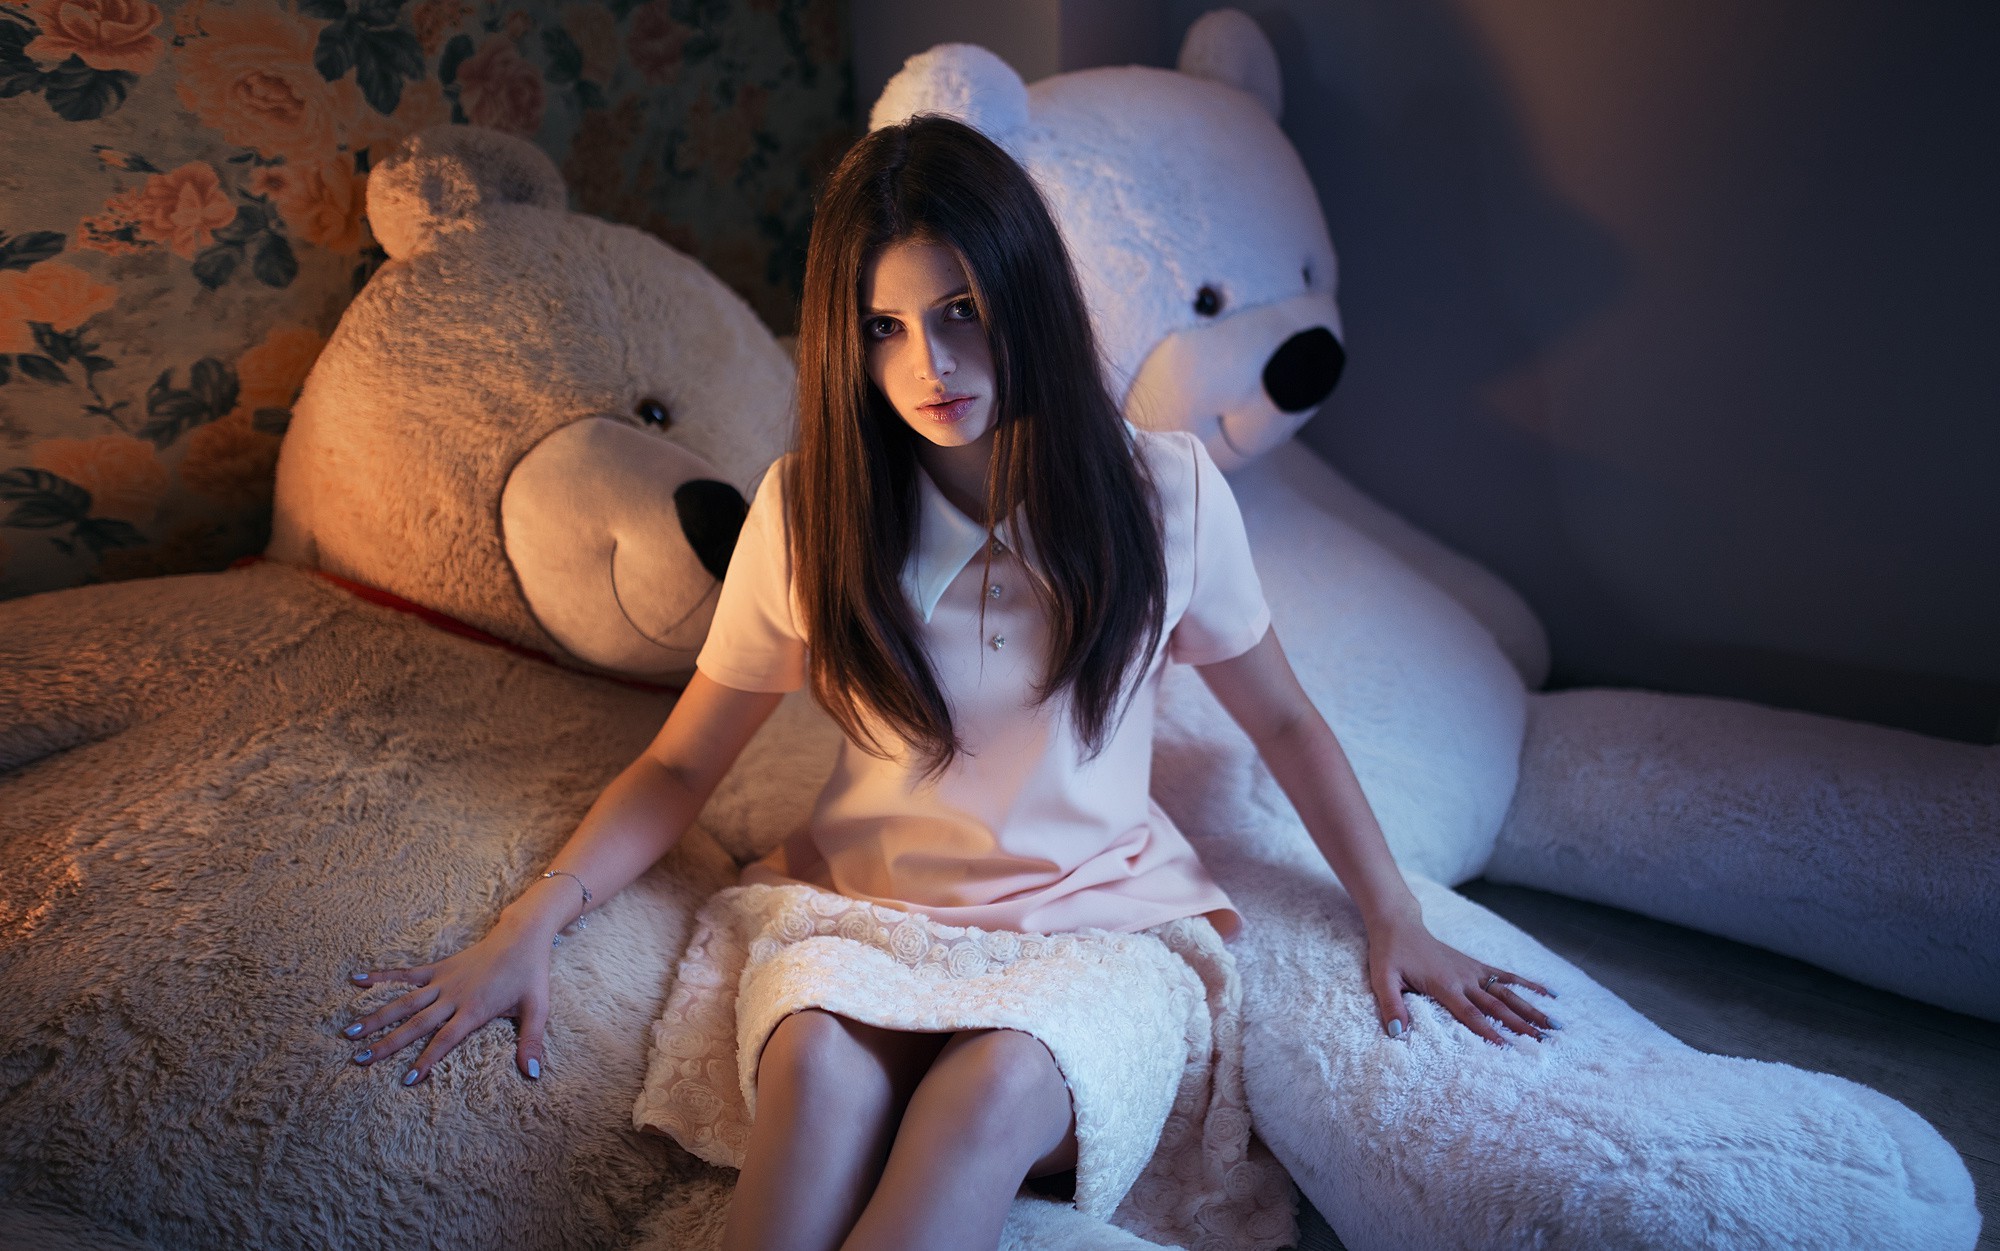 Women Model Teddy Bears Wallpapers Hd Desktop And Mobile Backgrounds